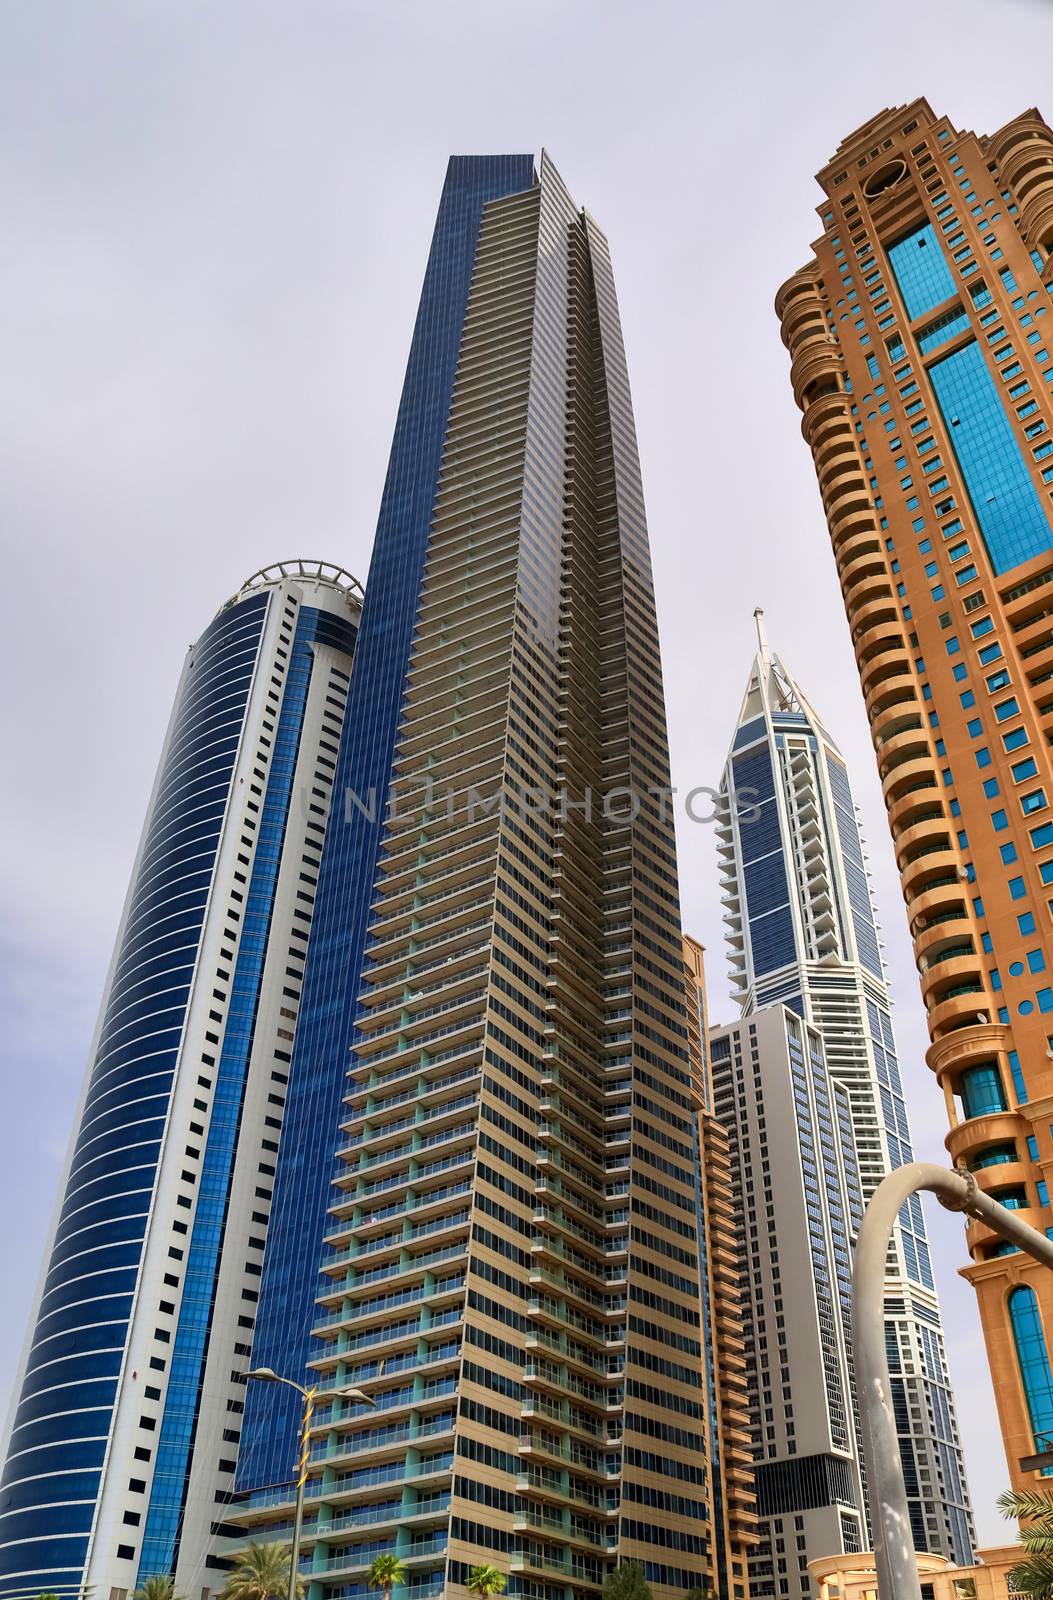 Luxury modern skyscrapers in the center of Dubai city, United Arab Emirates